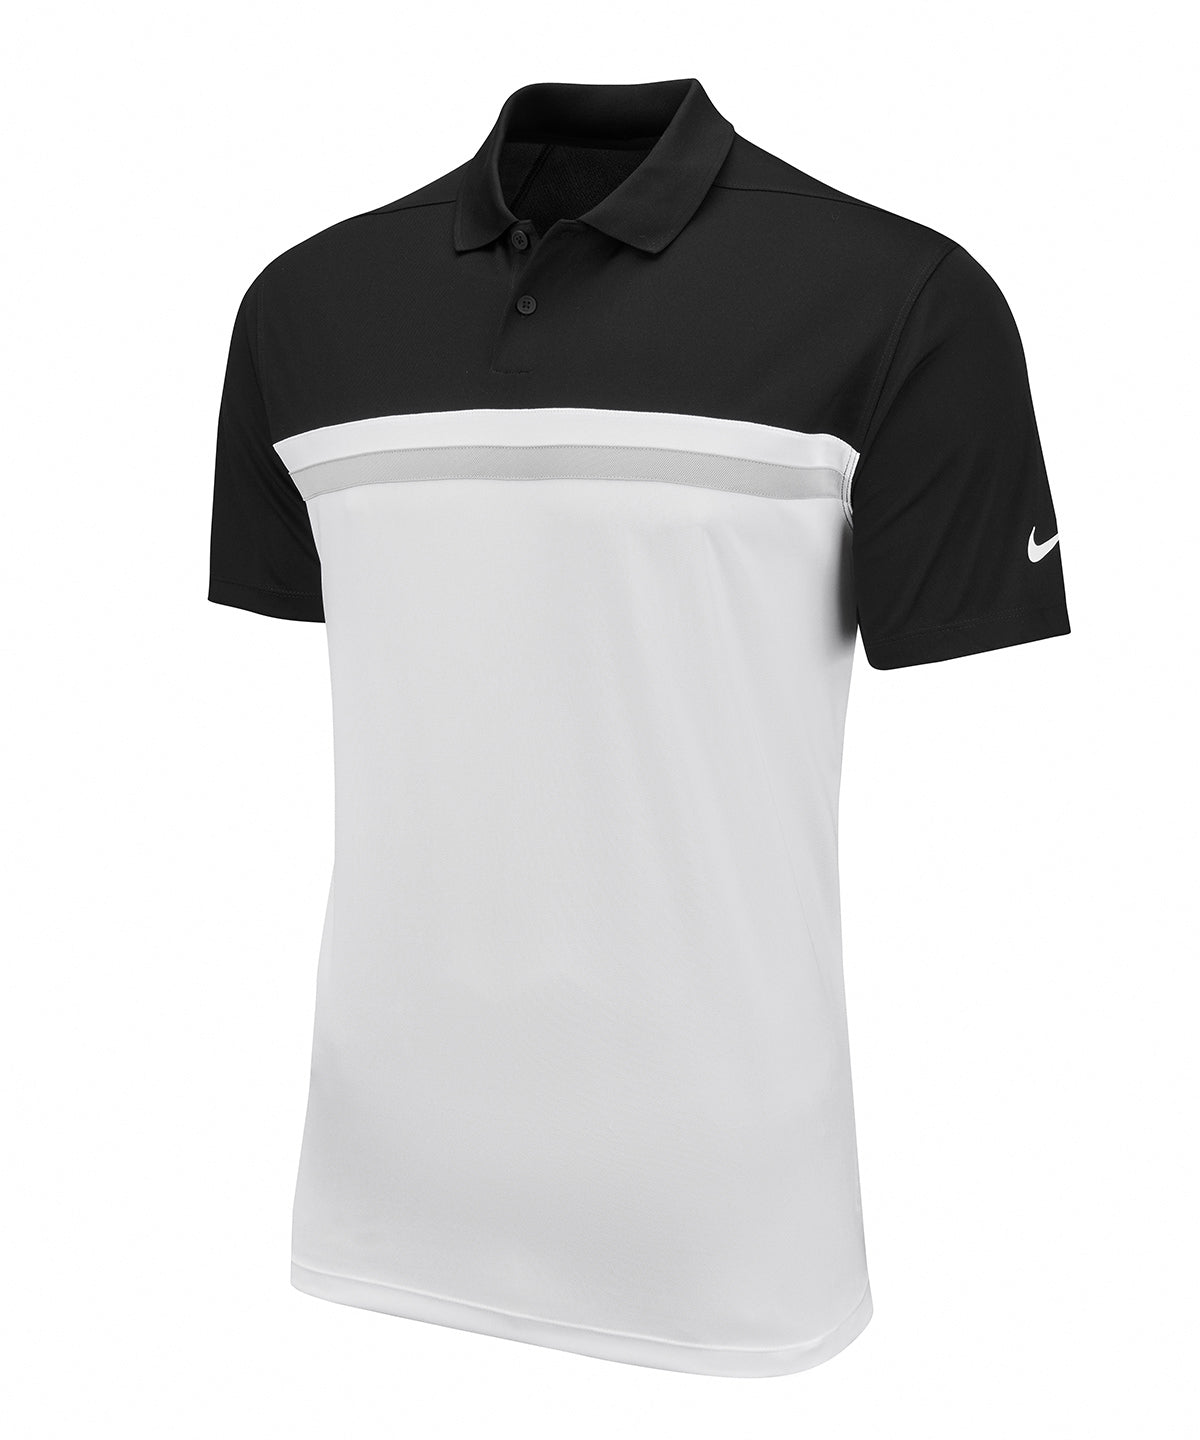 Personalised Polo Shirts - Black Nike Nike Victory colour block polo